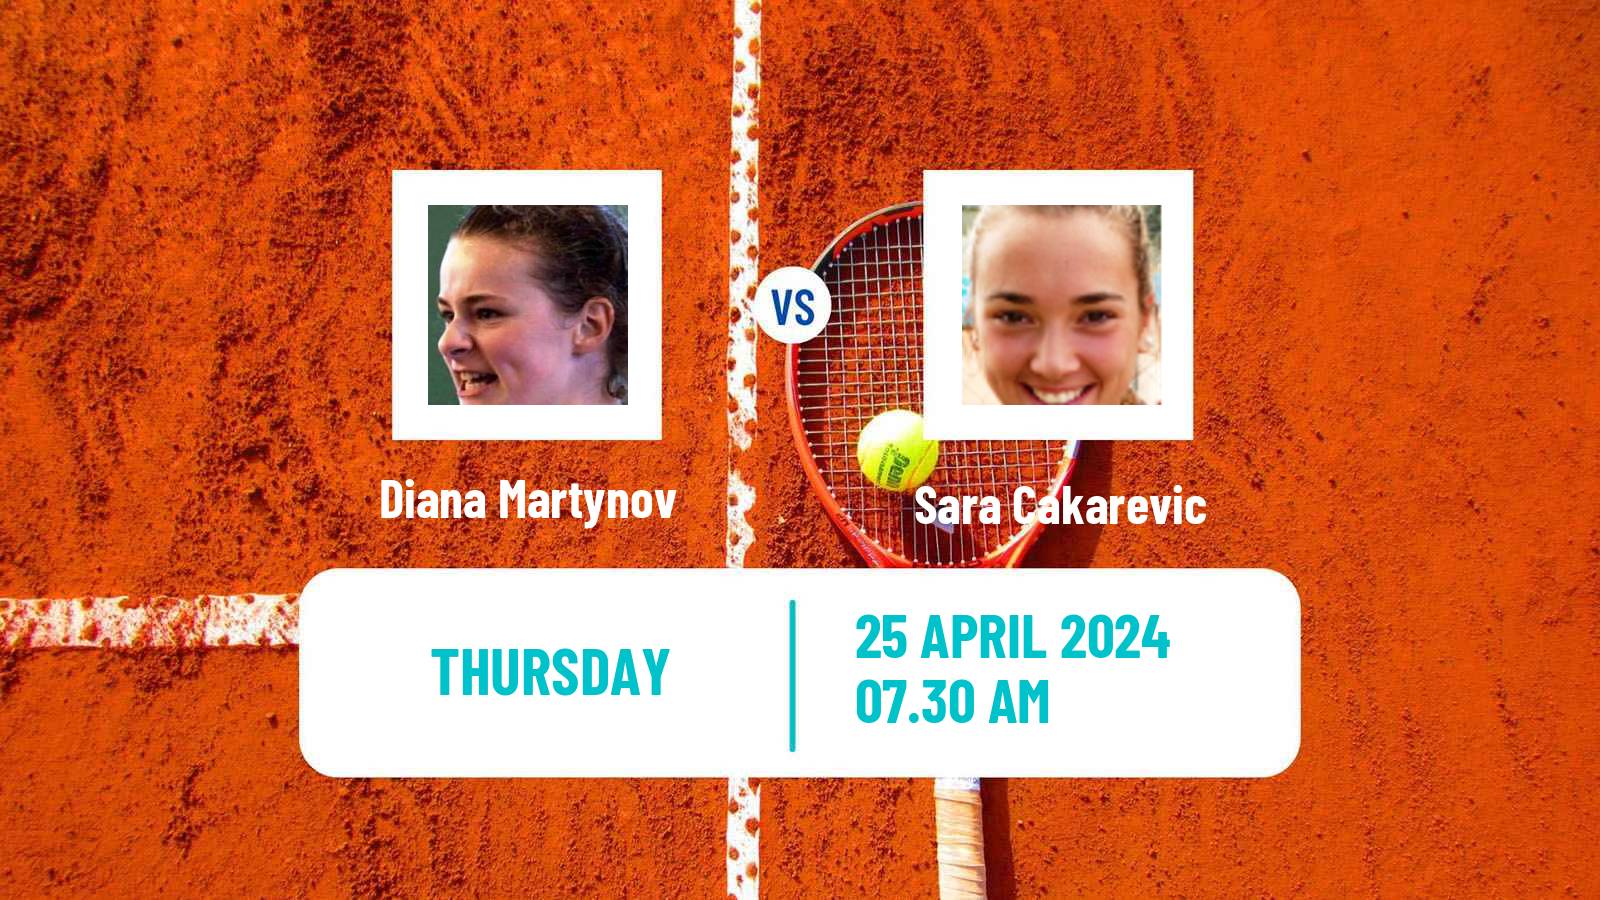 Tennis ITF W35 Hammamet 6 Women Diana Martynov - Sara Cakarevic